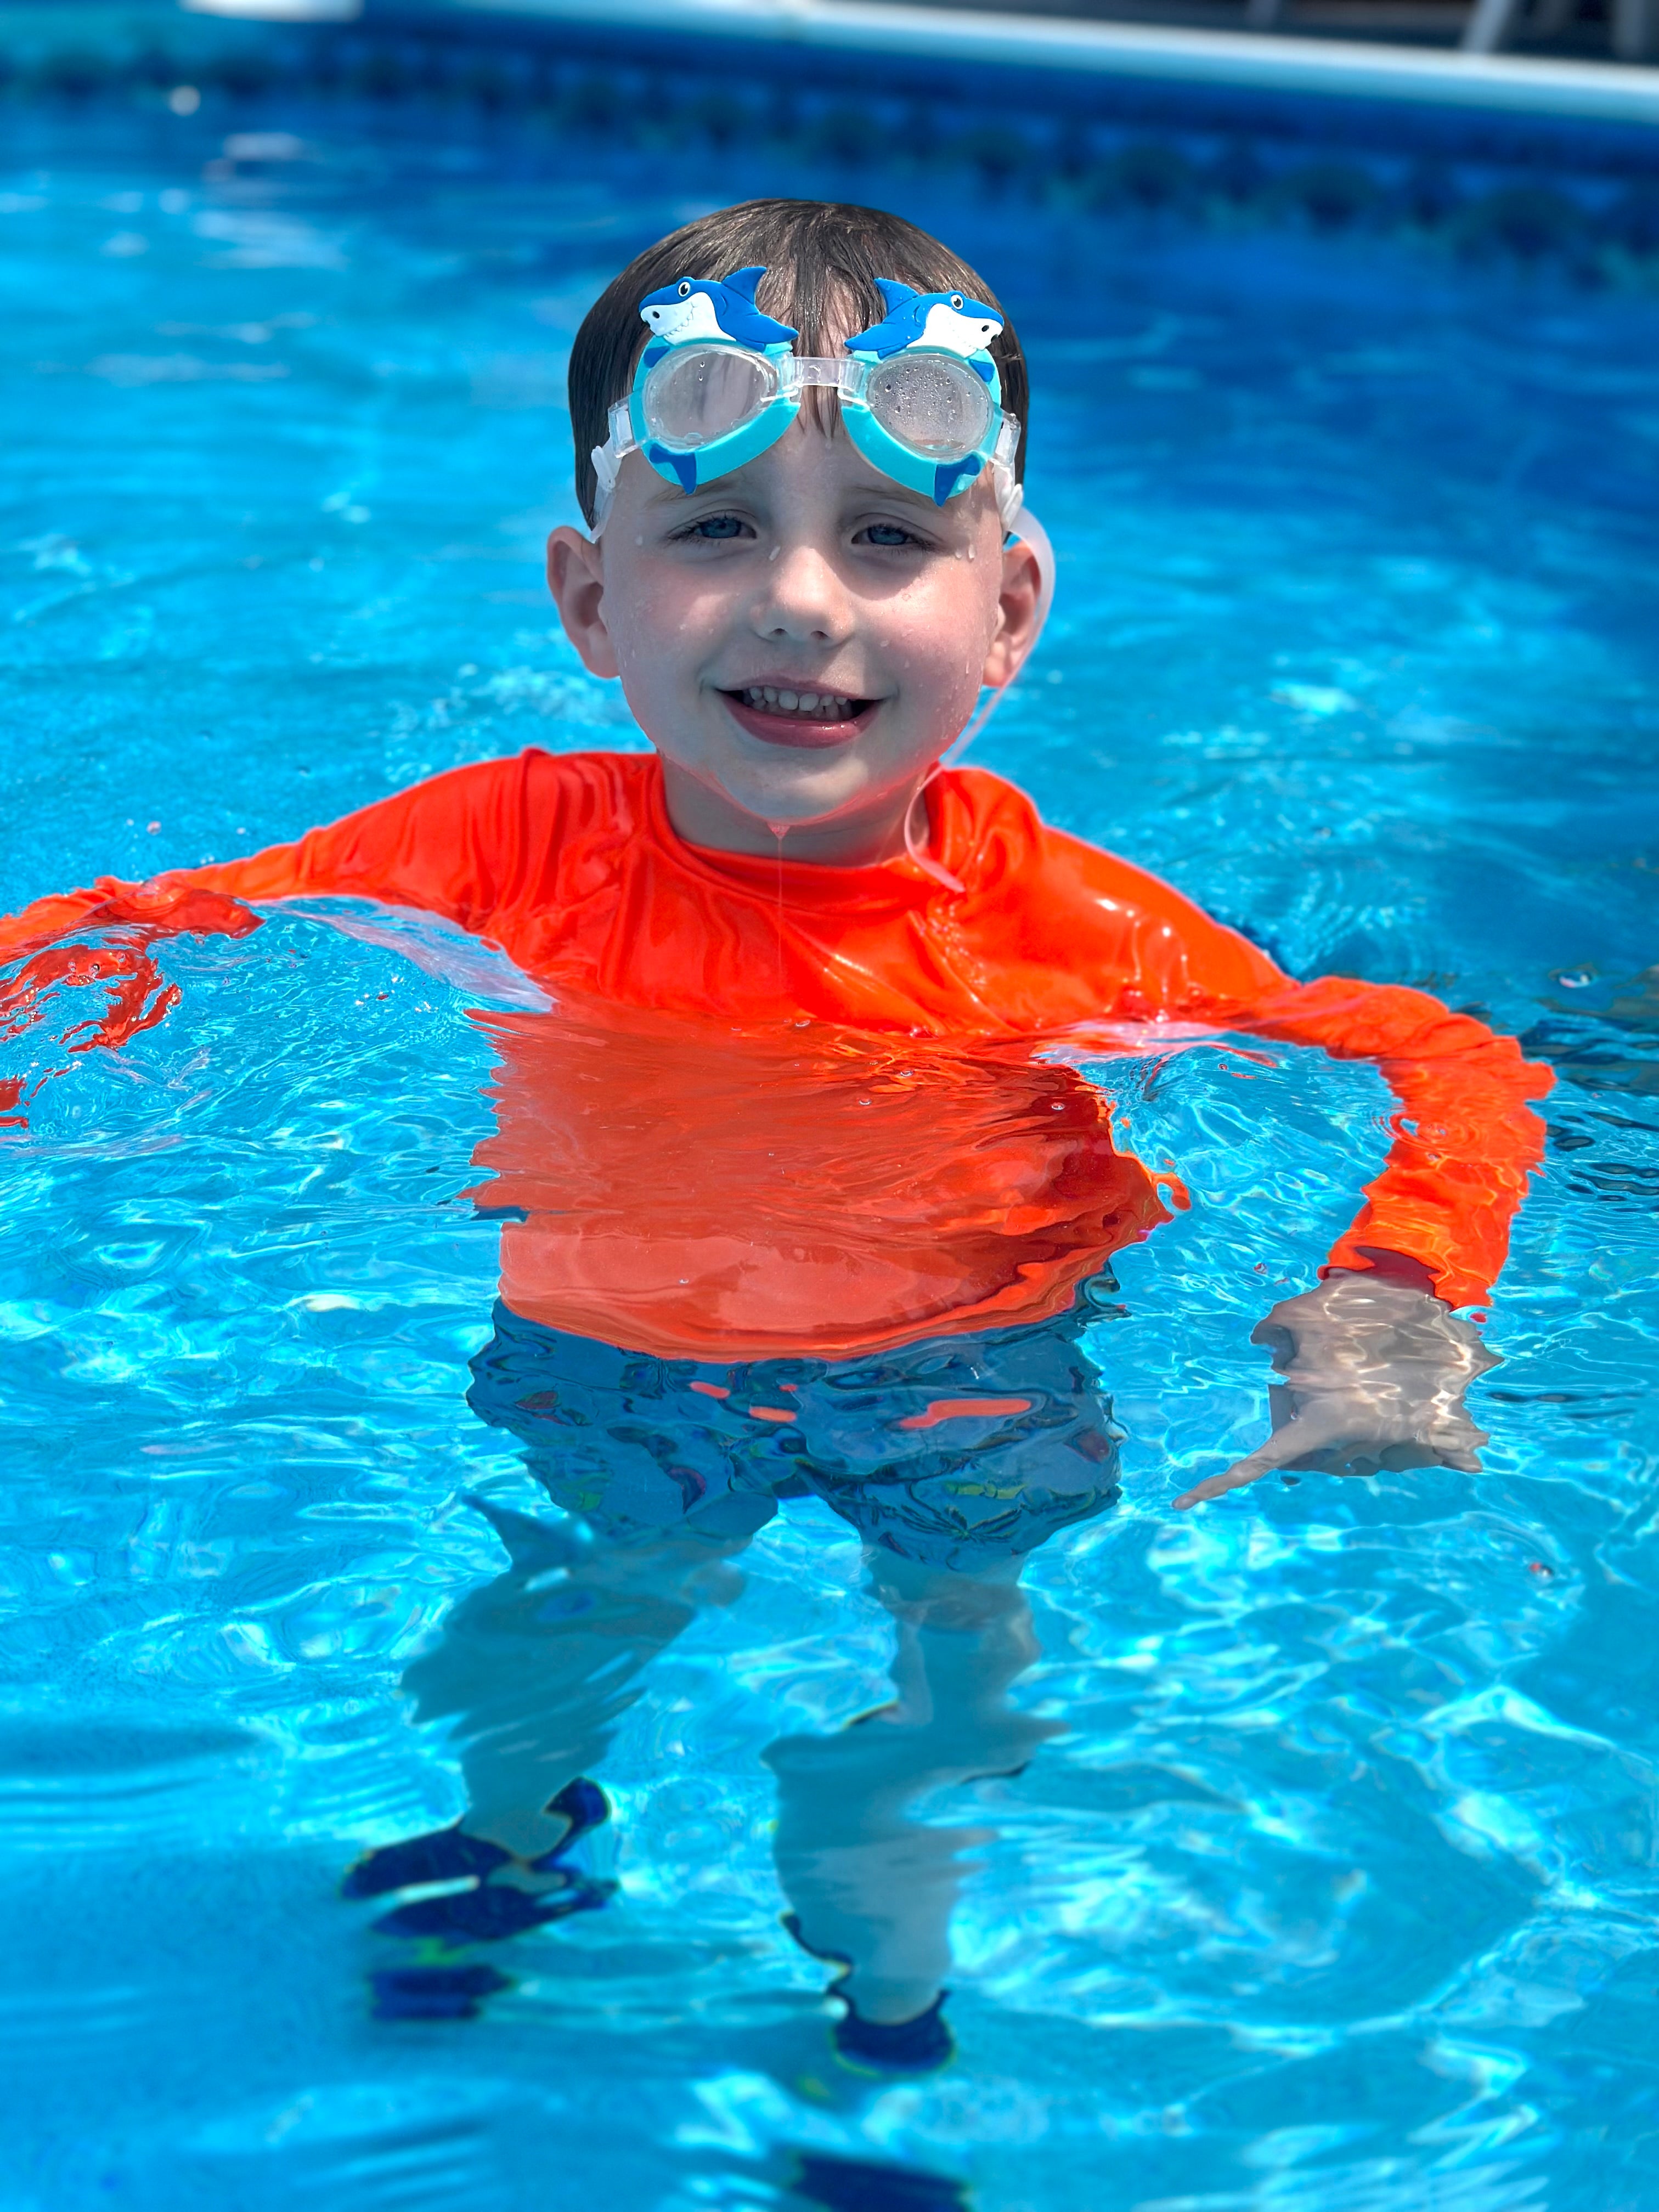 Kids neon swim, neon orange rash guard glowing above and below water. 